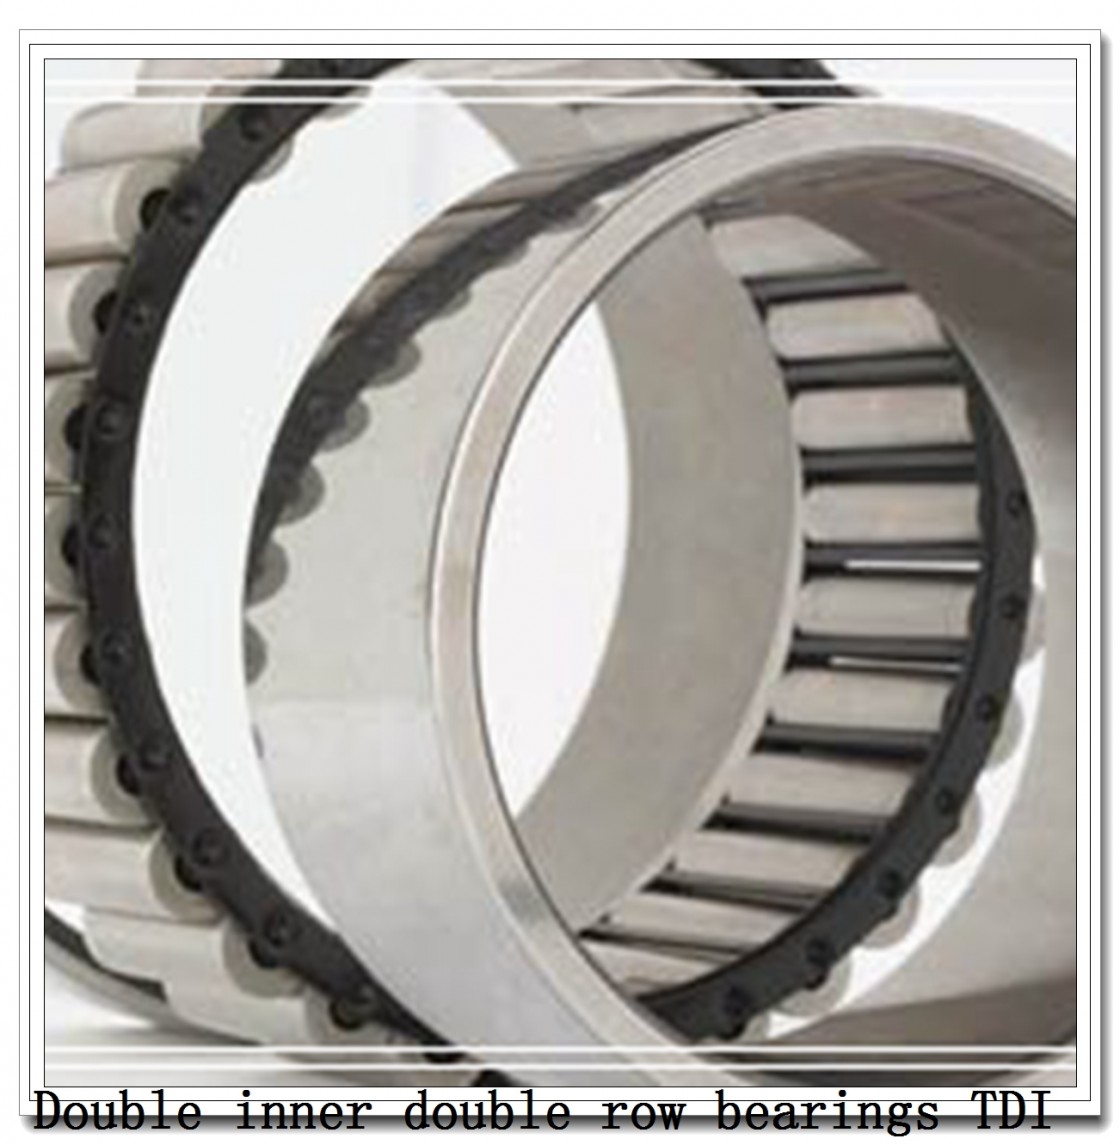 105TDO225-1 Double inner double row bearings TDI